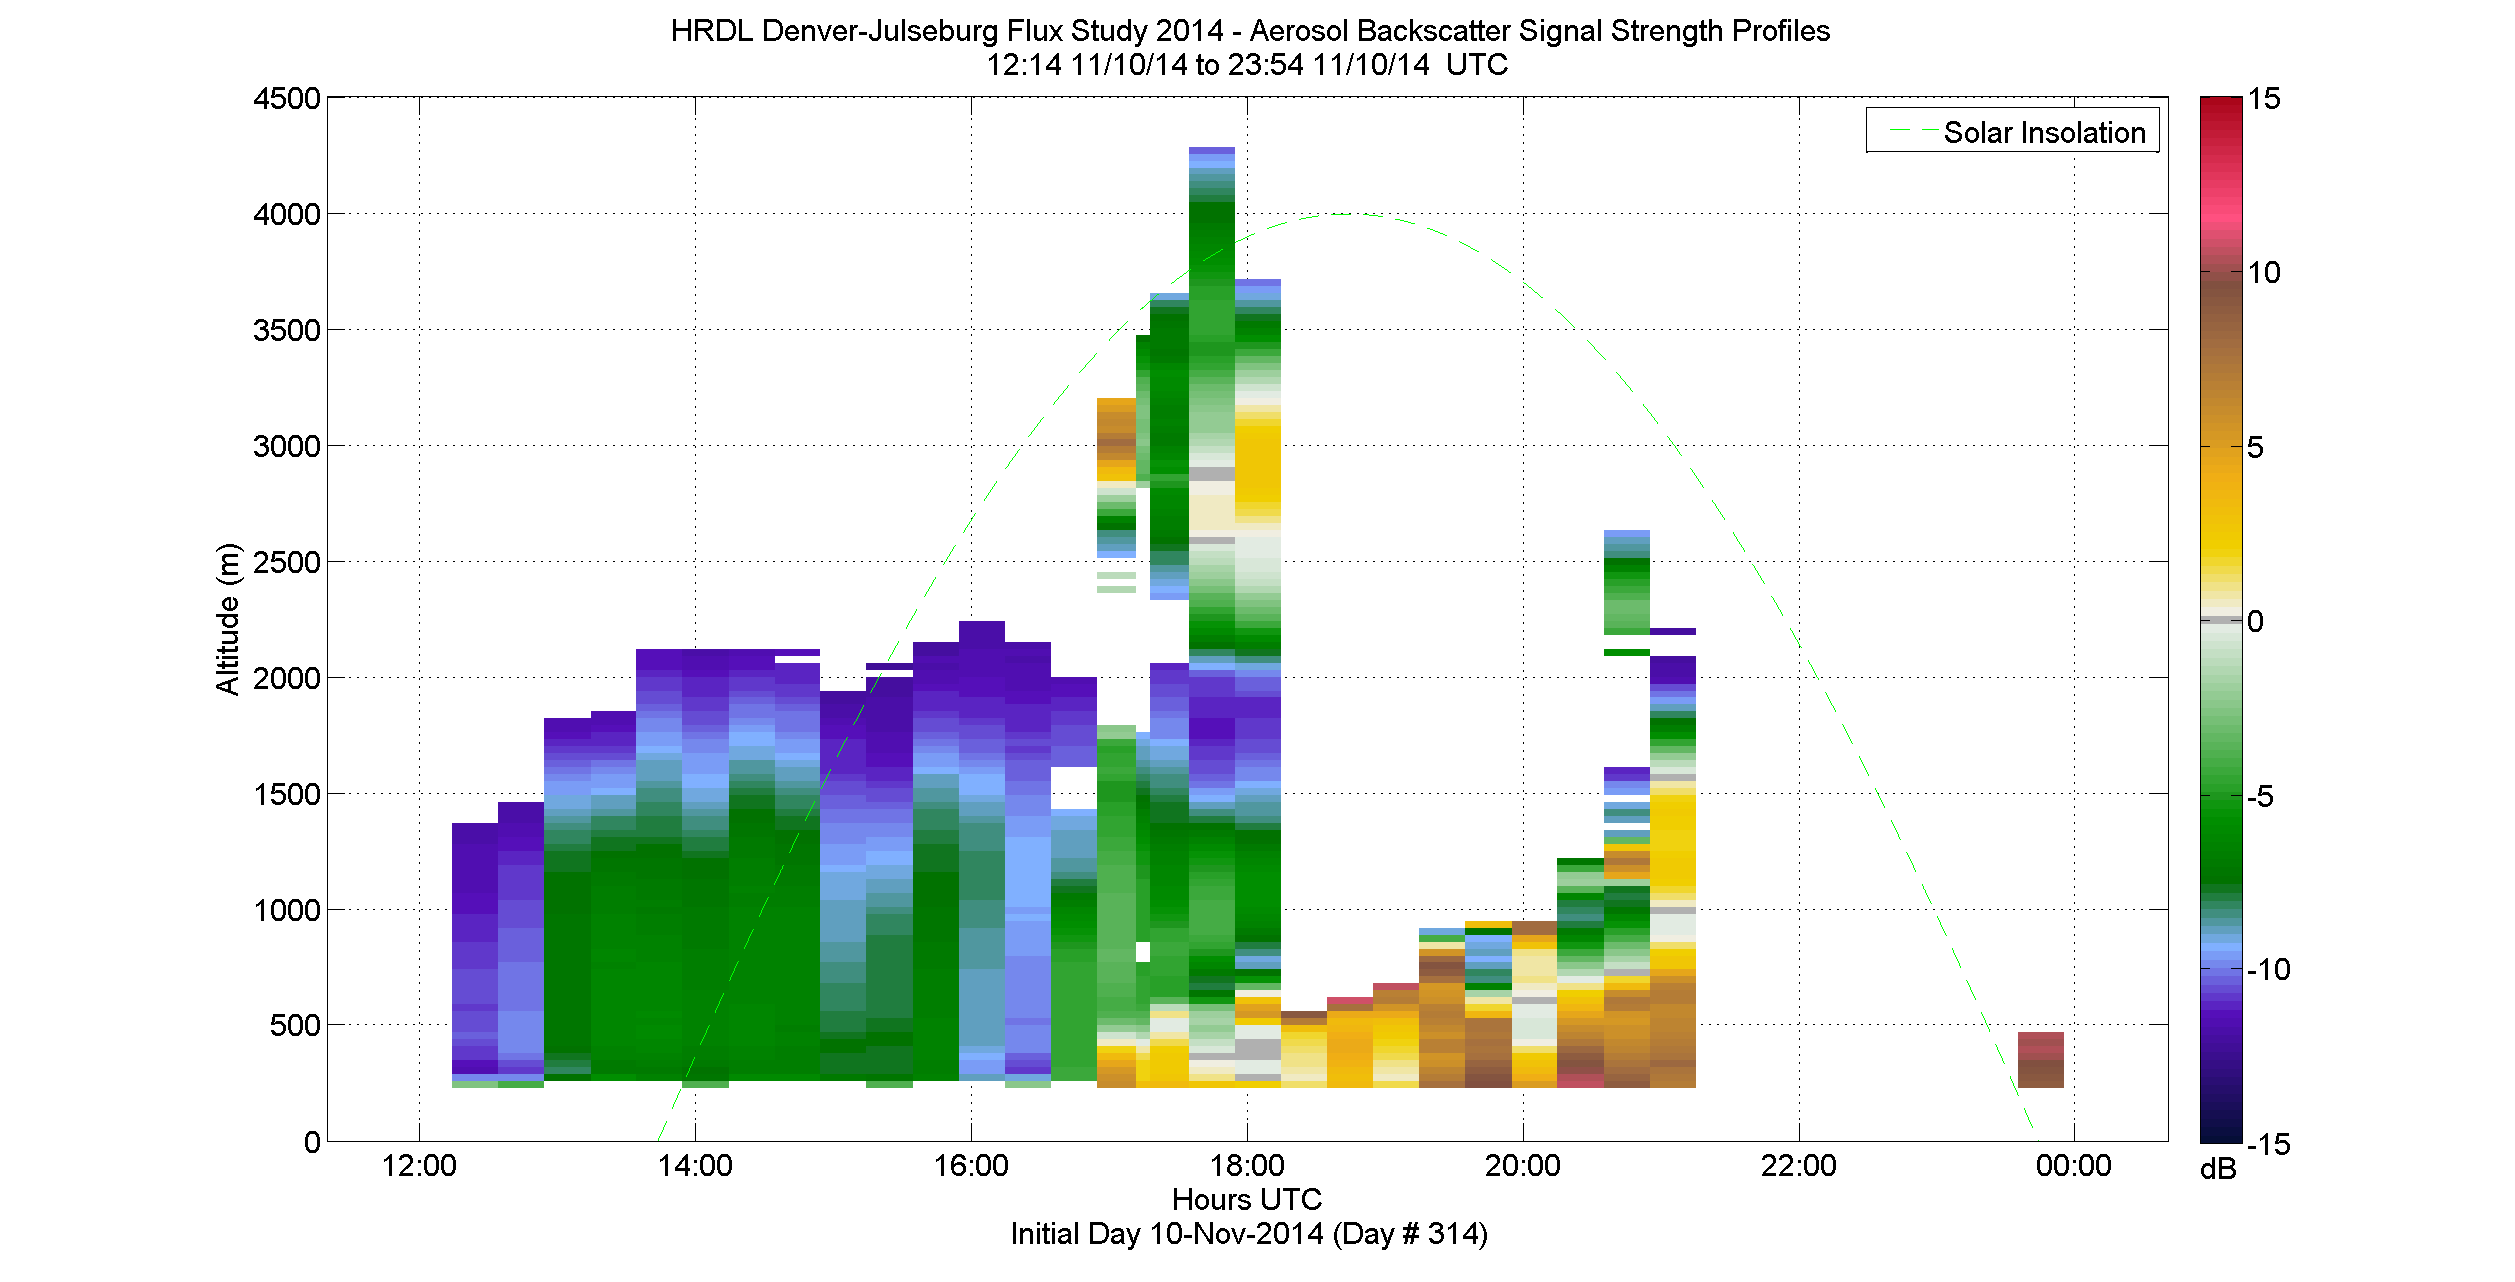 HRDL vertical intensity profile - November 10 pm